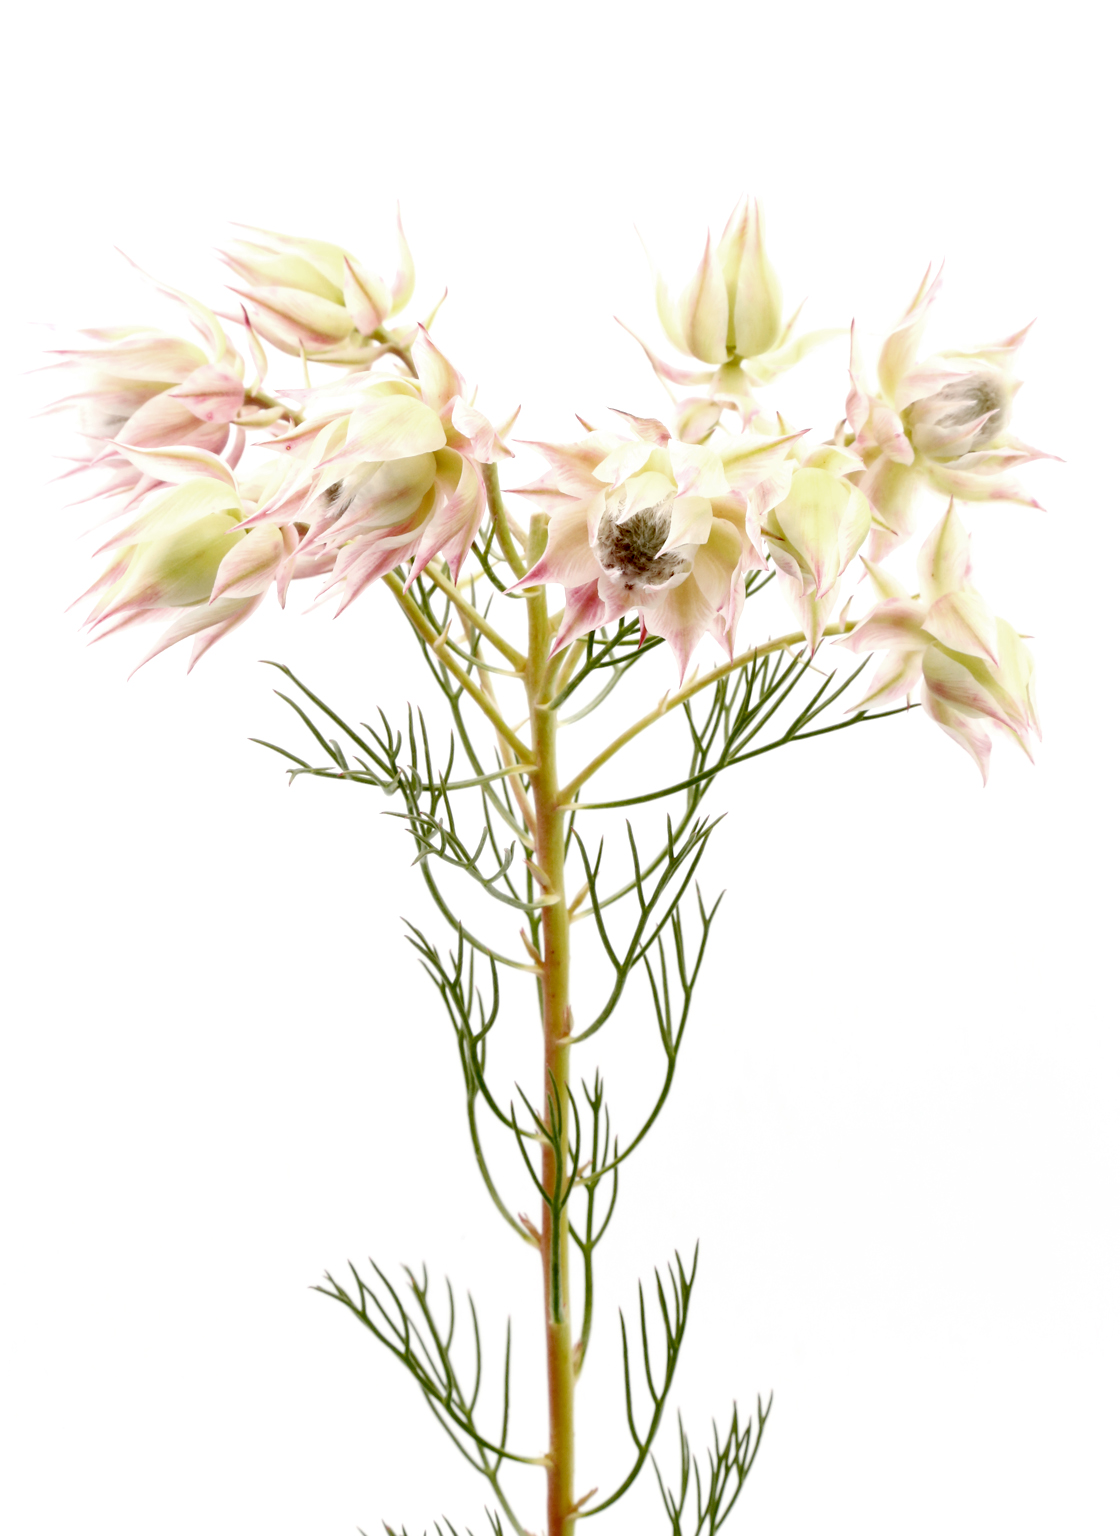 Protea Blushing Bride - Odilia Flowers